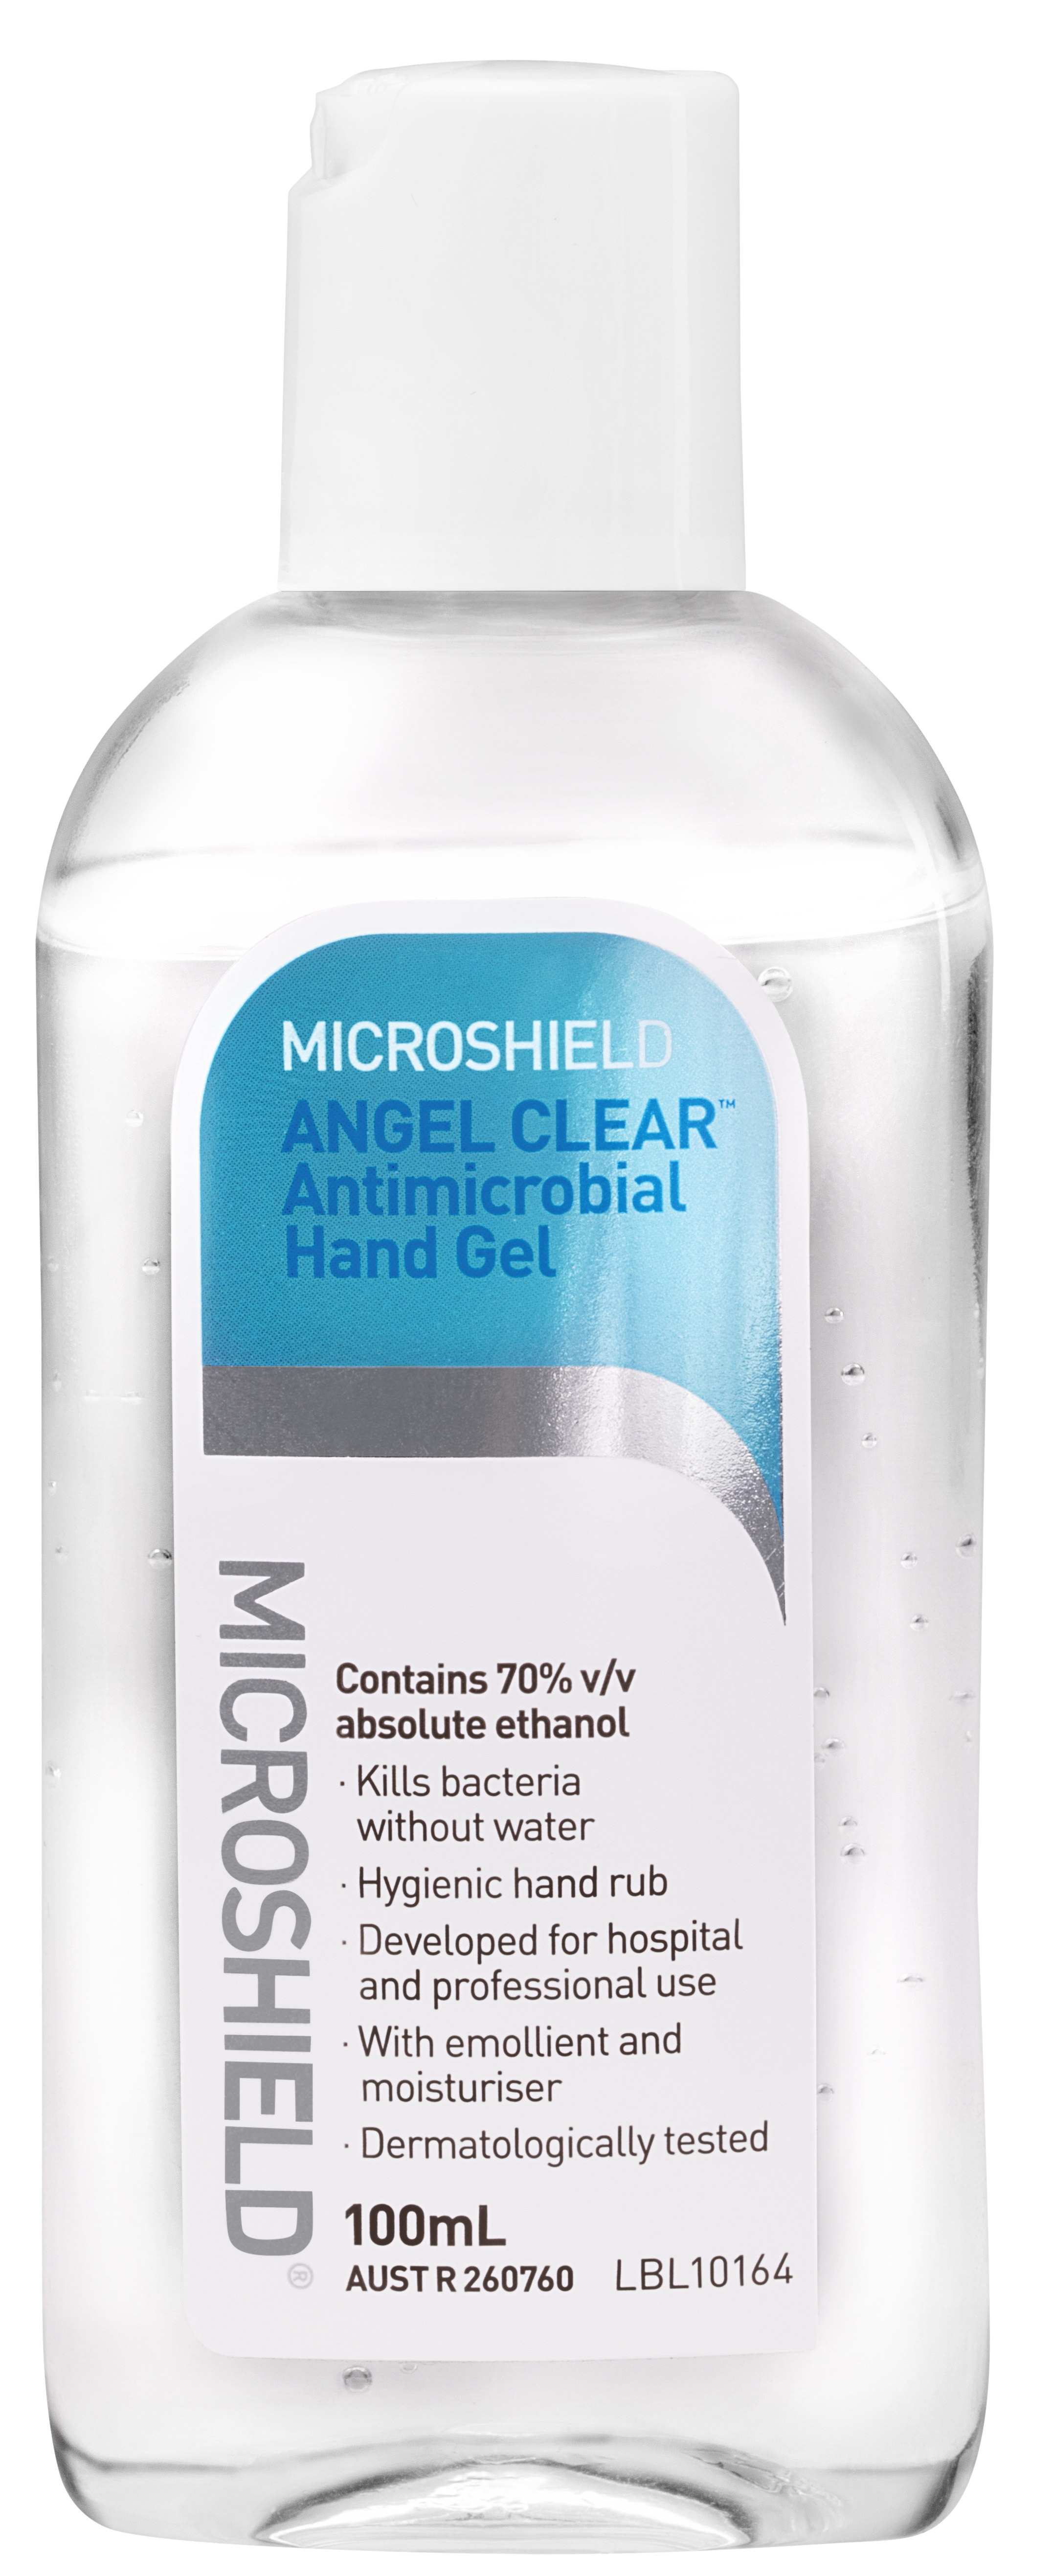 Microshield Angel Clear Antimicrobial Hand Gel 100ml image 0